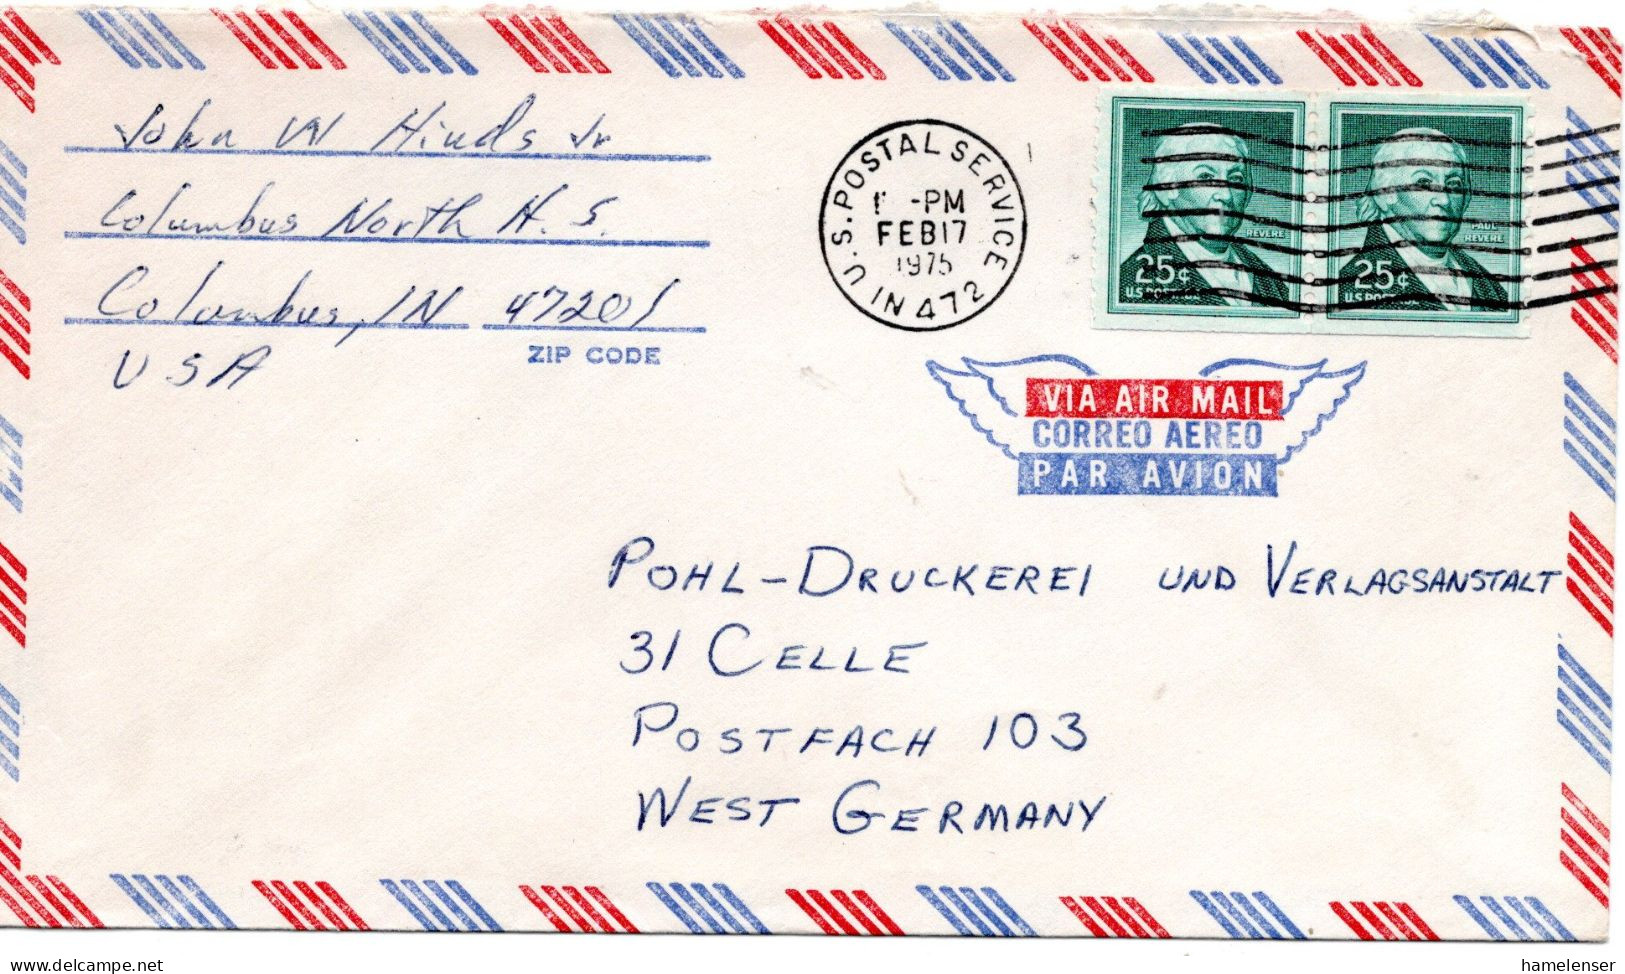 75199 - USA - 1975 - 2@25¢ Revere (Rolle) A LpBf U.S.POSTAL SERVICE IN 472 -> Westdeutschland - Storia Postale